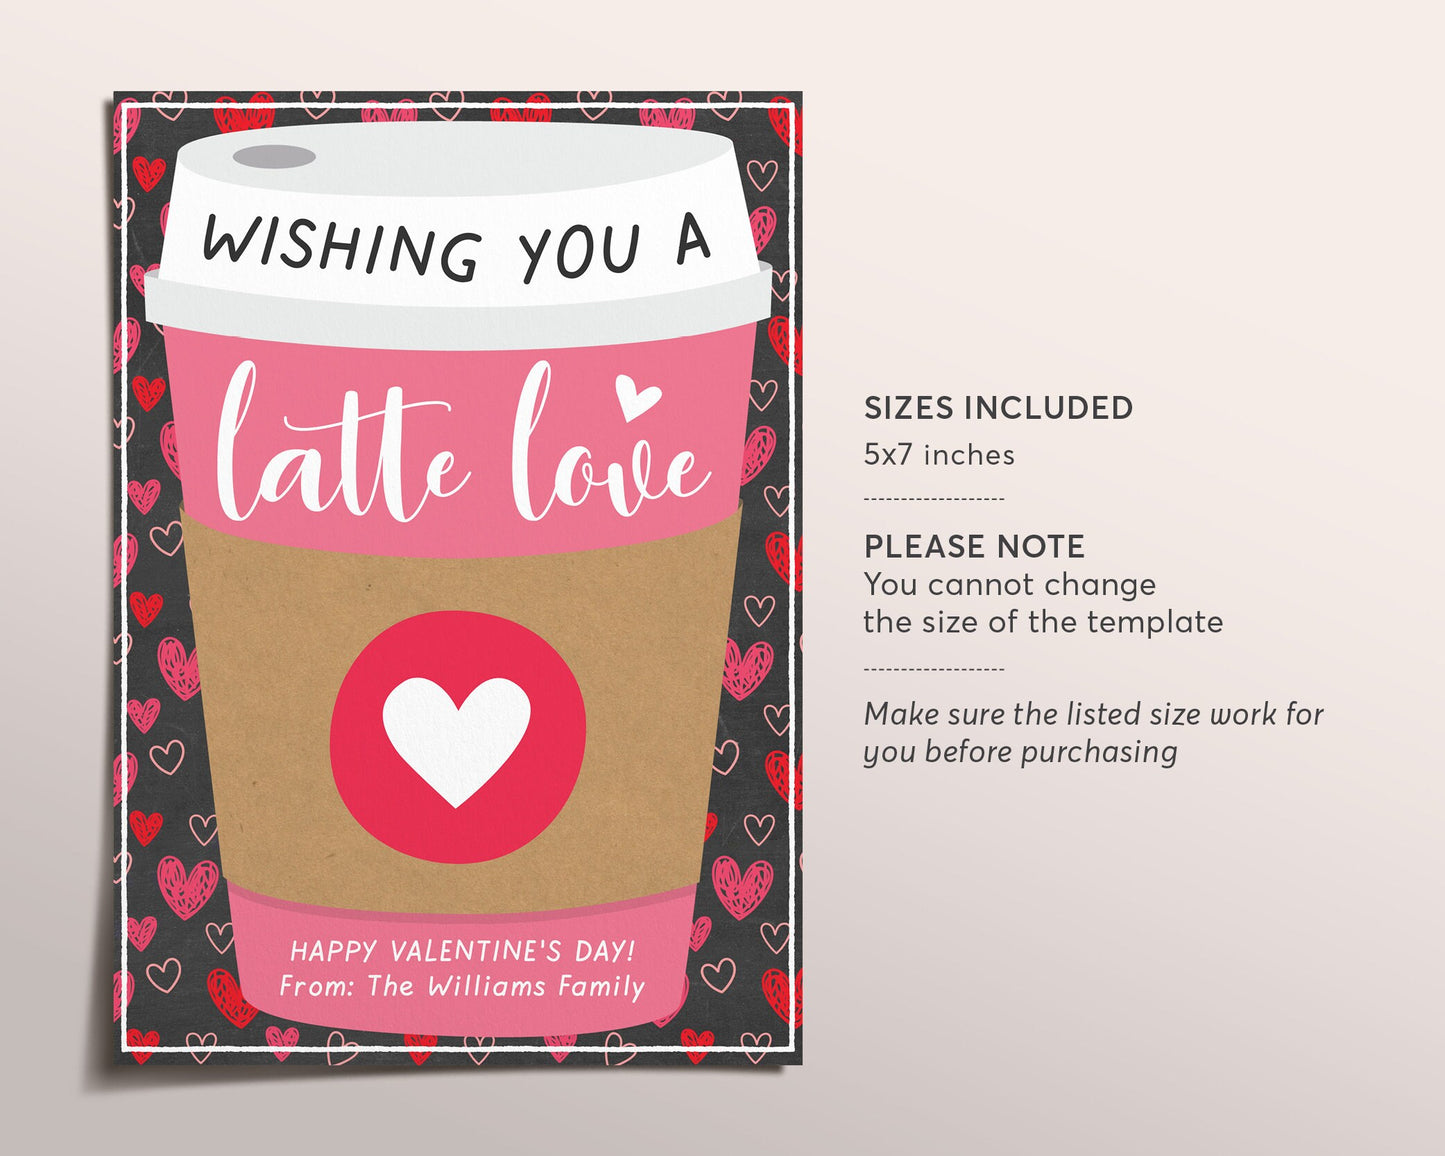 Valentine Coffee Gift Card Holder Editable Template, Latte Love Valentine's Day Thank You Gift For Teacher PTO PTA Babysitter Appreciation